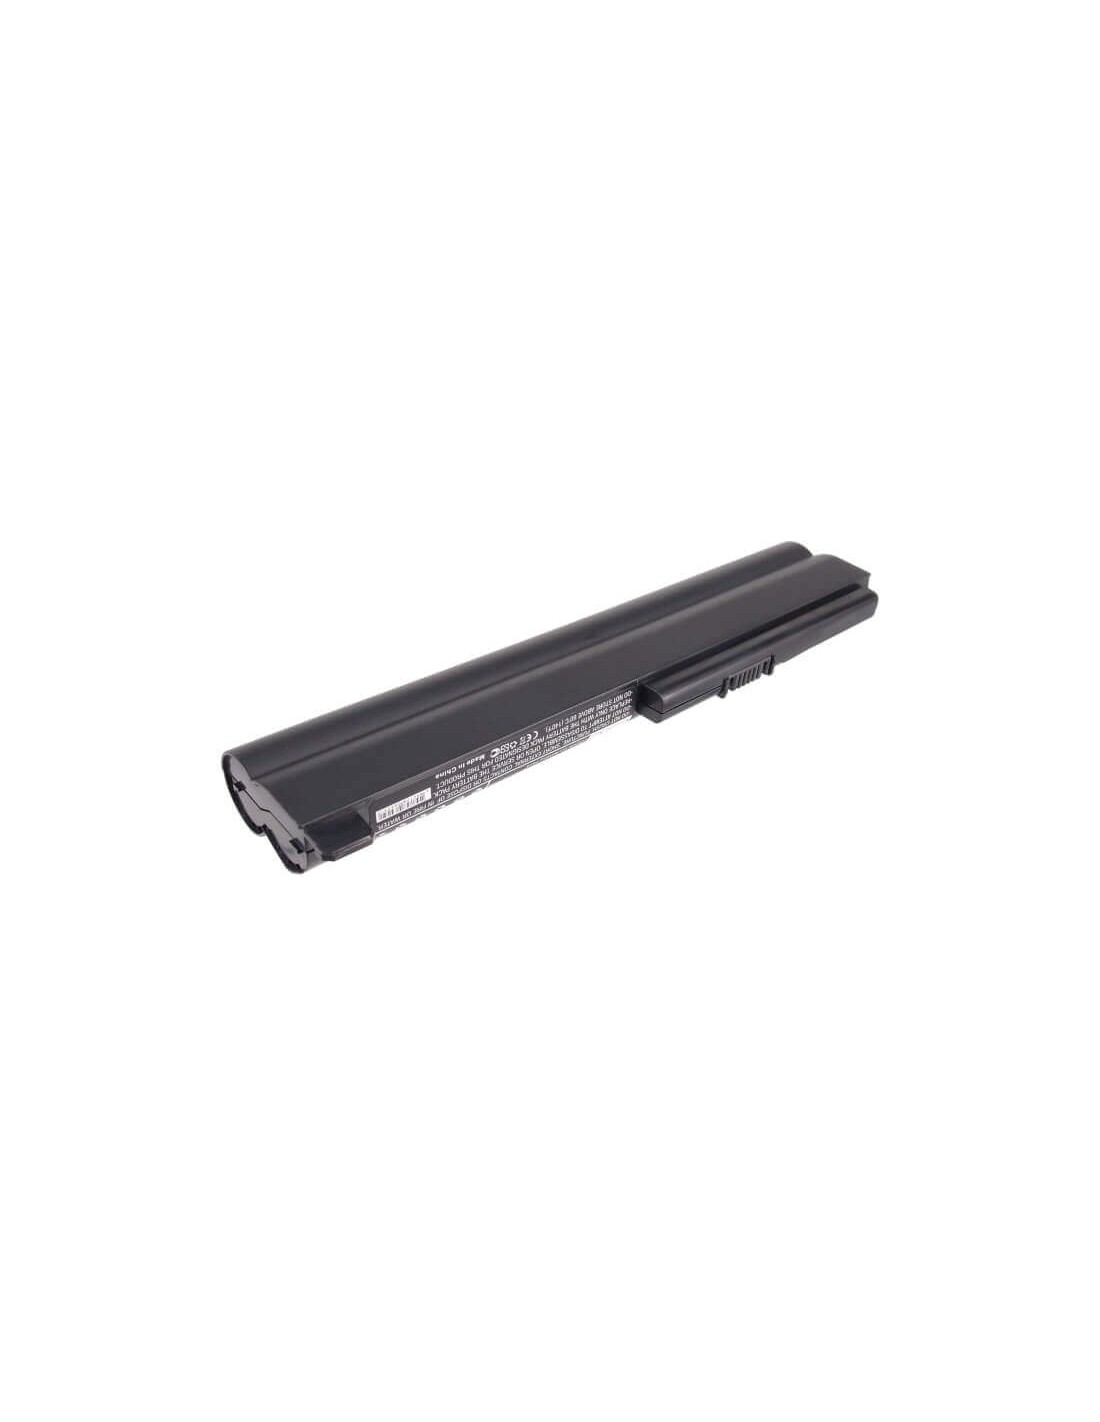 Black Battery for LG / Hasee T6-i5430m, Super T6-i5430m 11.1V, 4400mAh - 48.84Wh